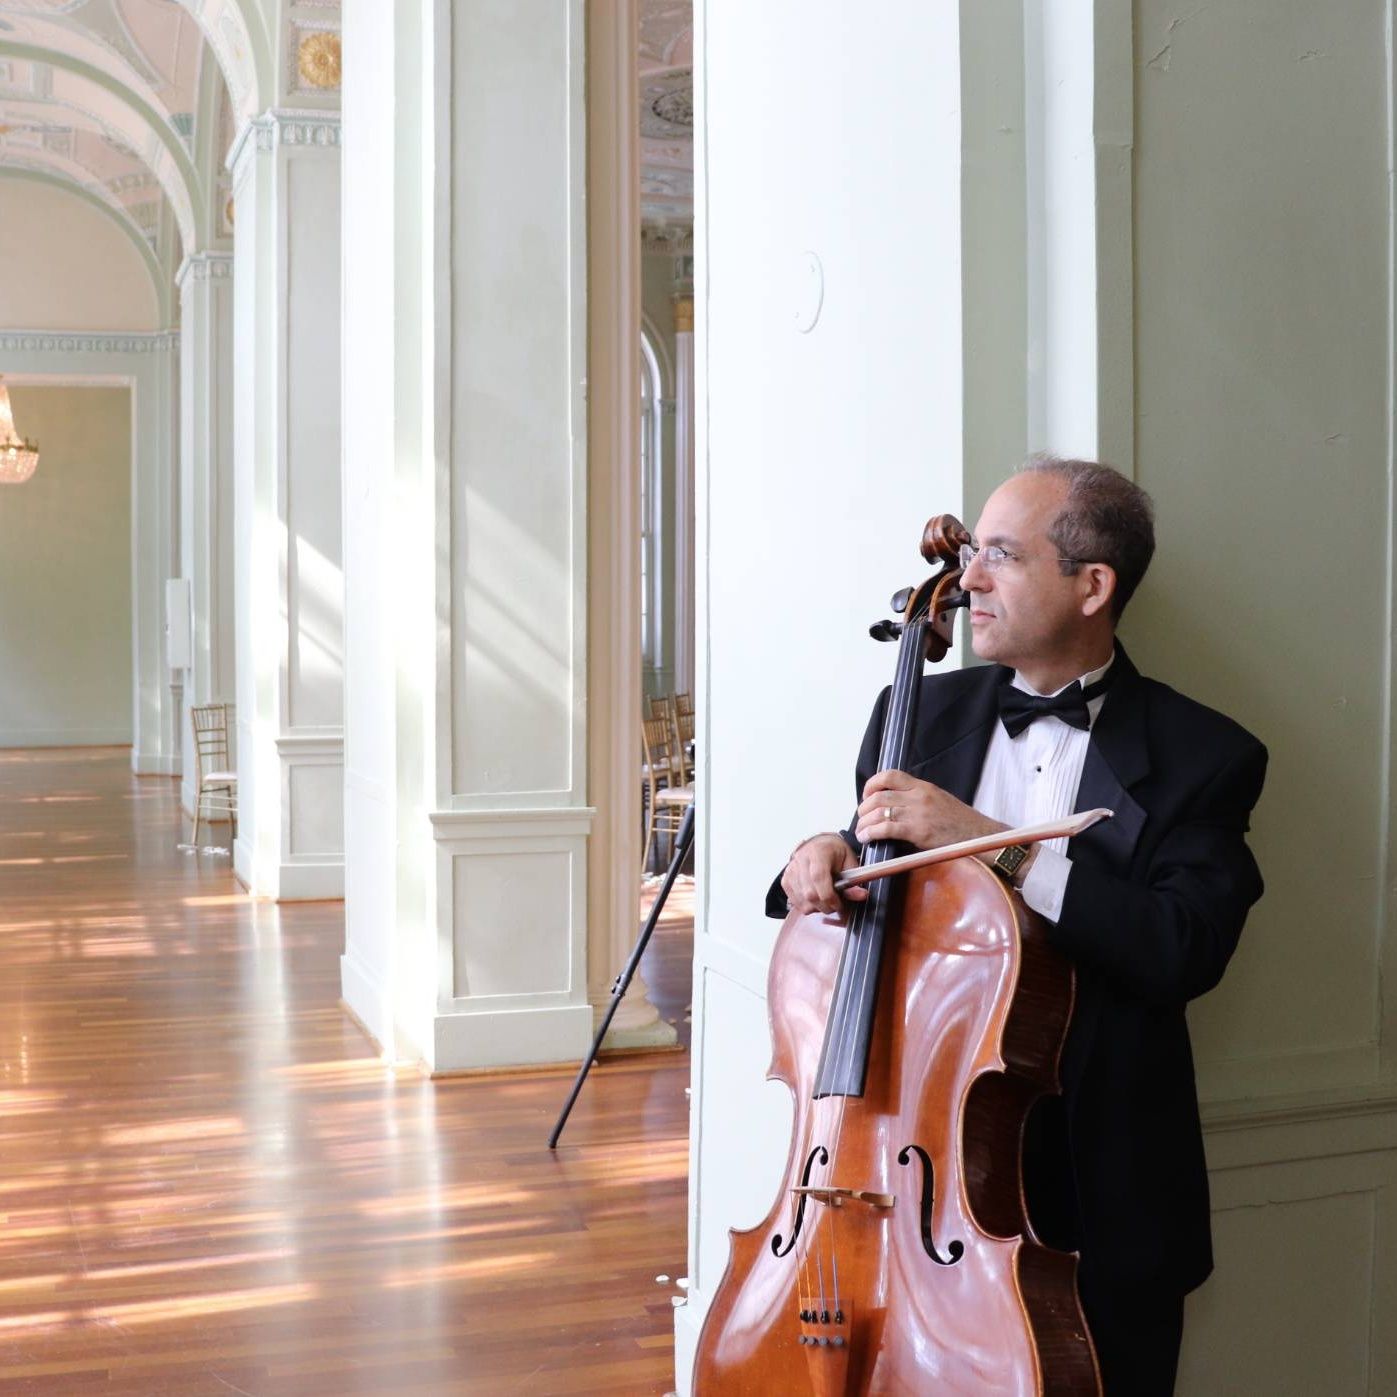 Welcome to Roy Harran, Cellist!